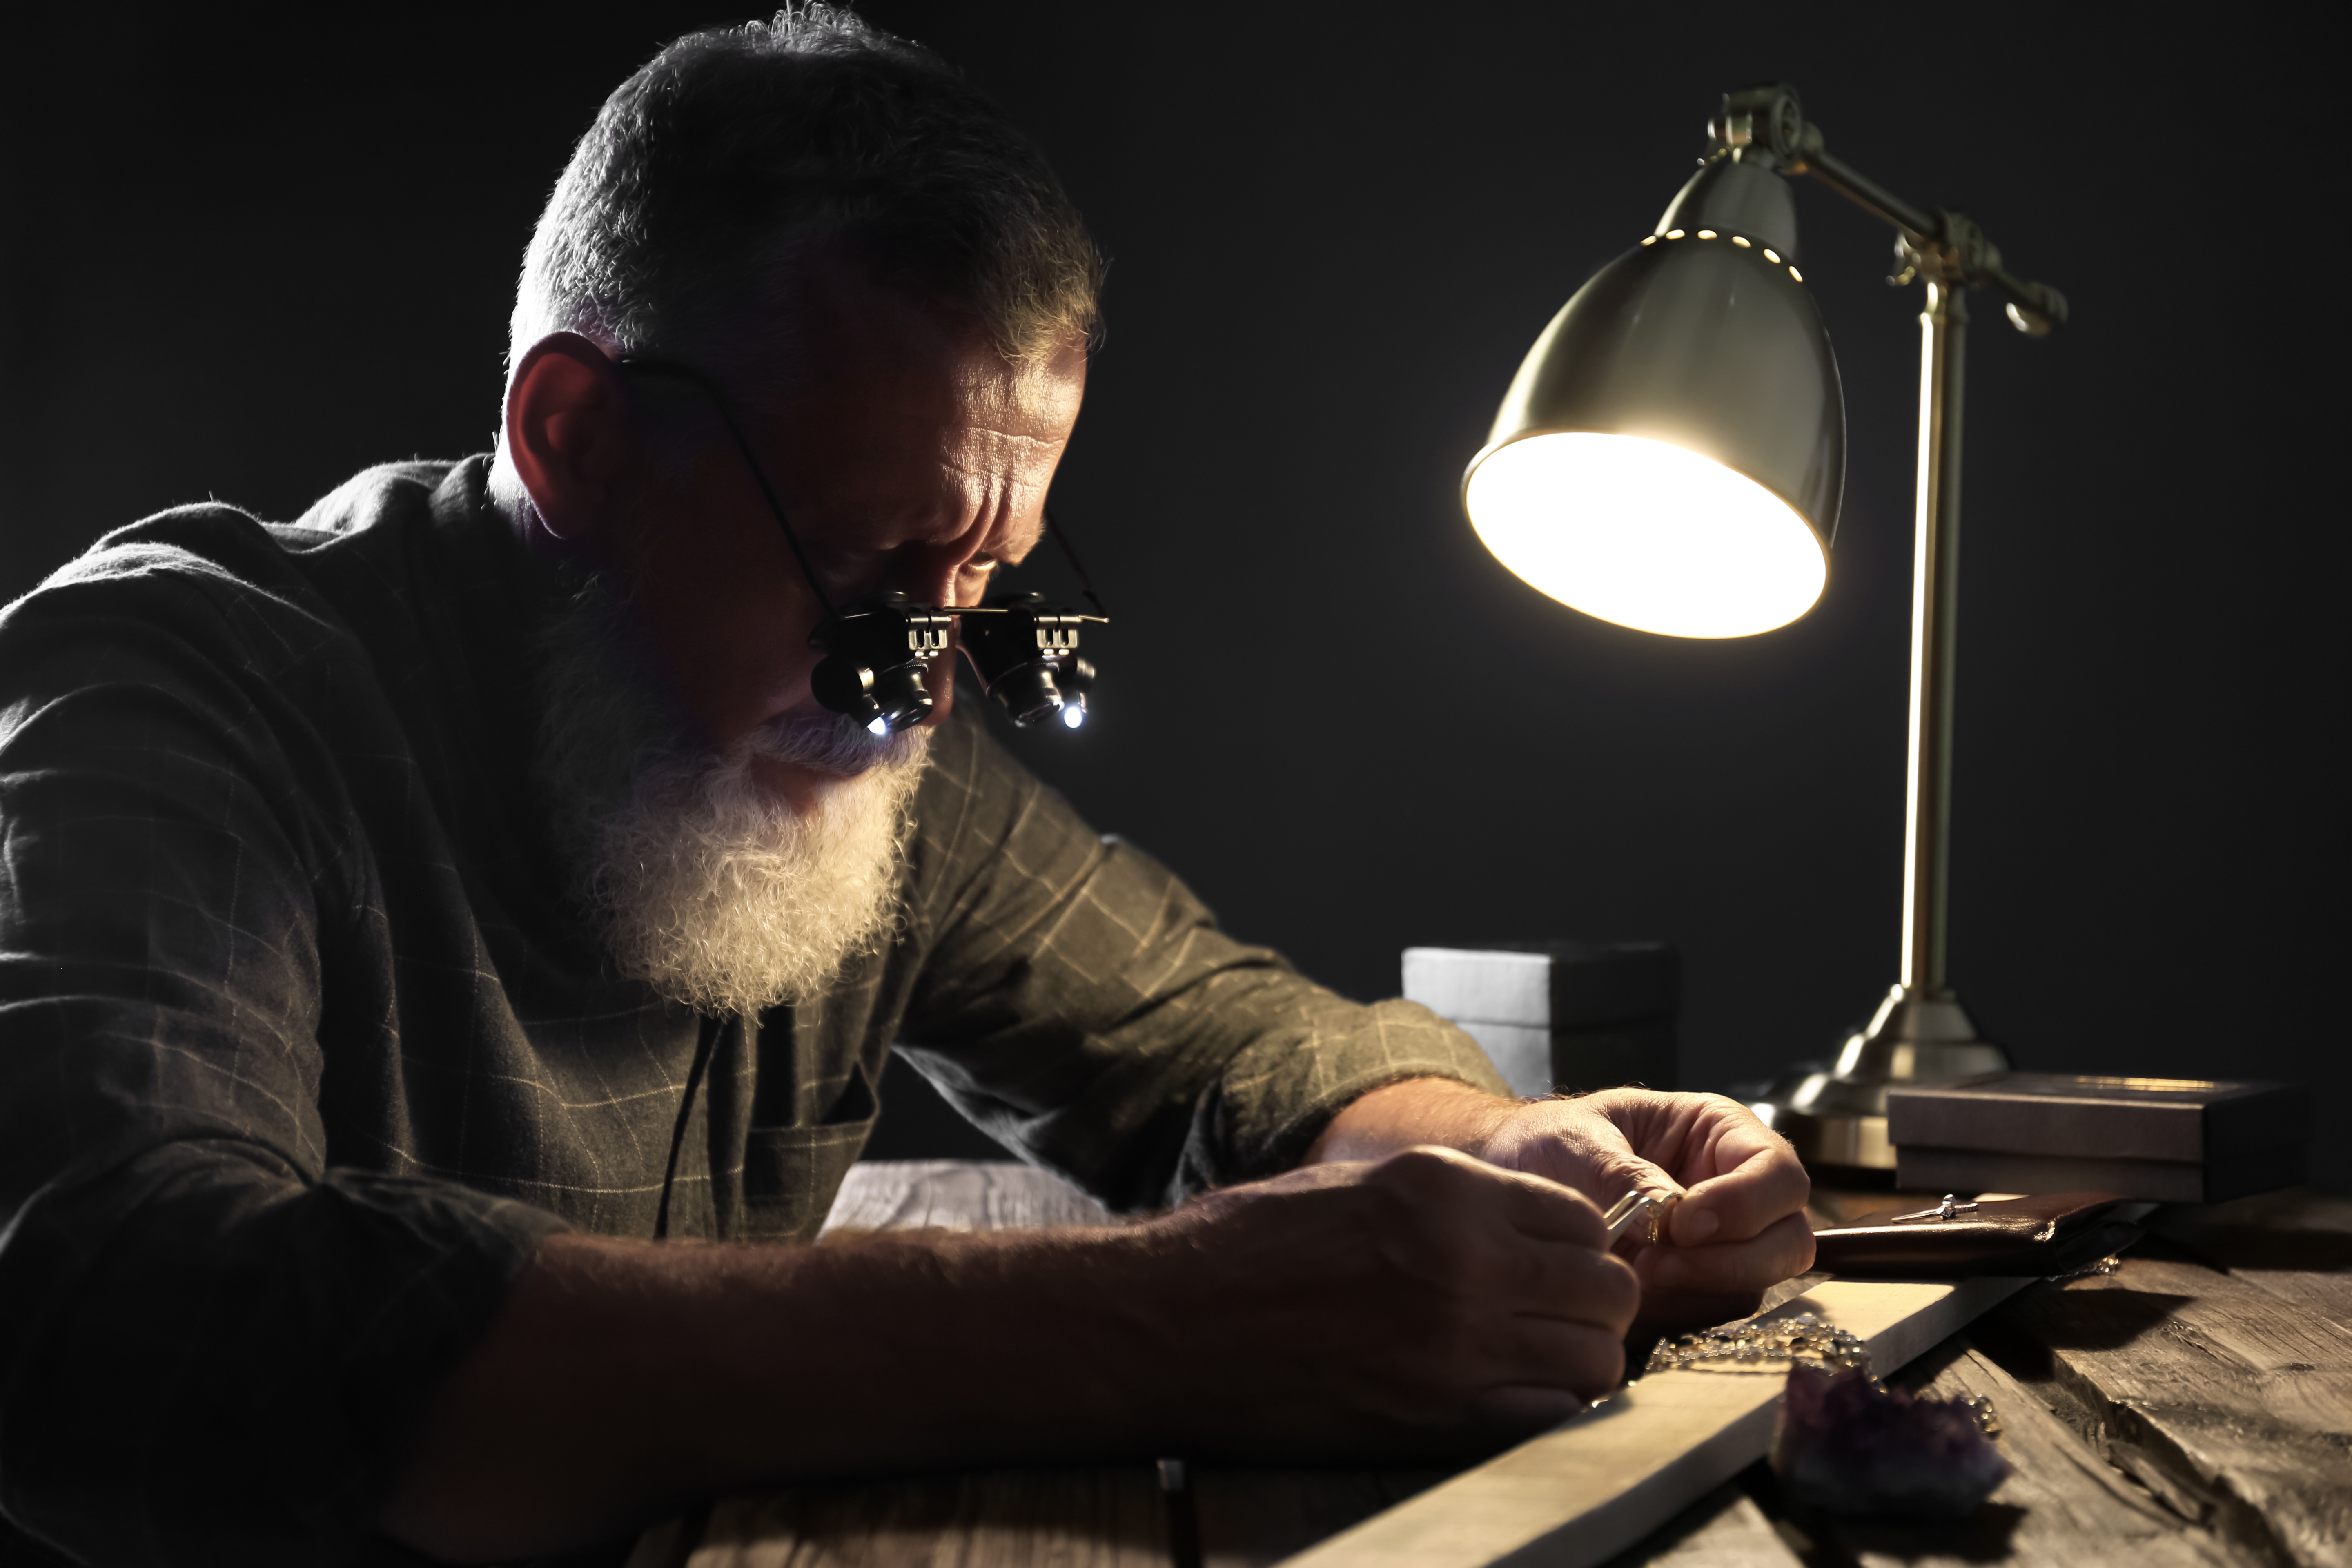 Hombre joyero evaluando un anillo de diamantes en un taller | Fuente: Shutterstock.com